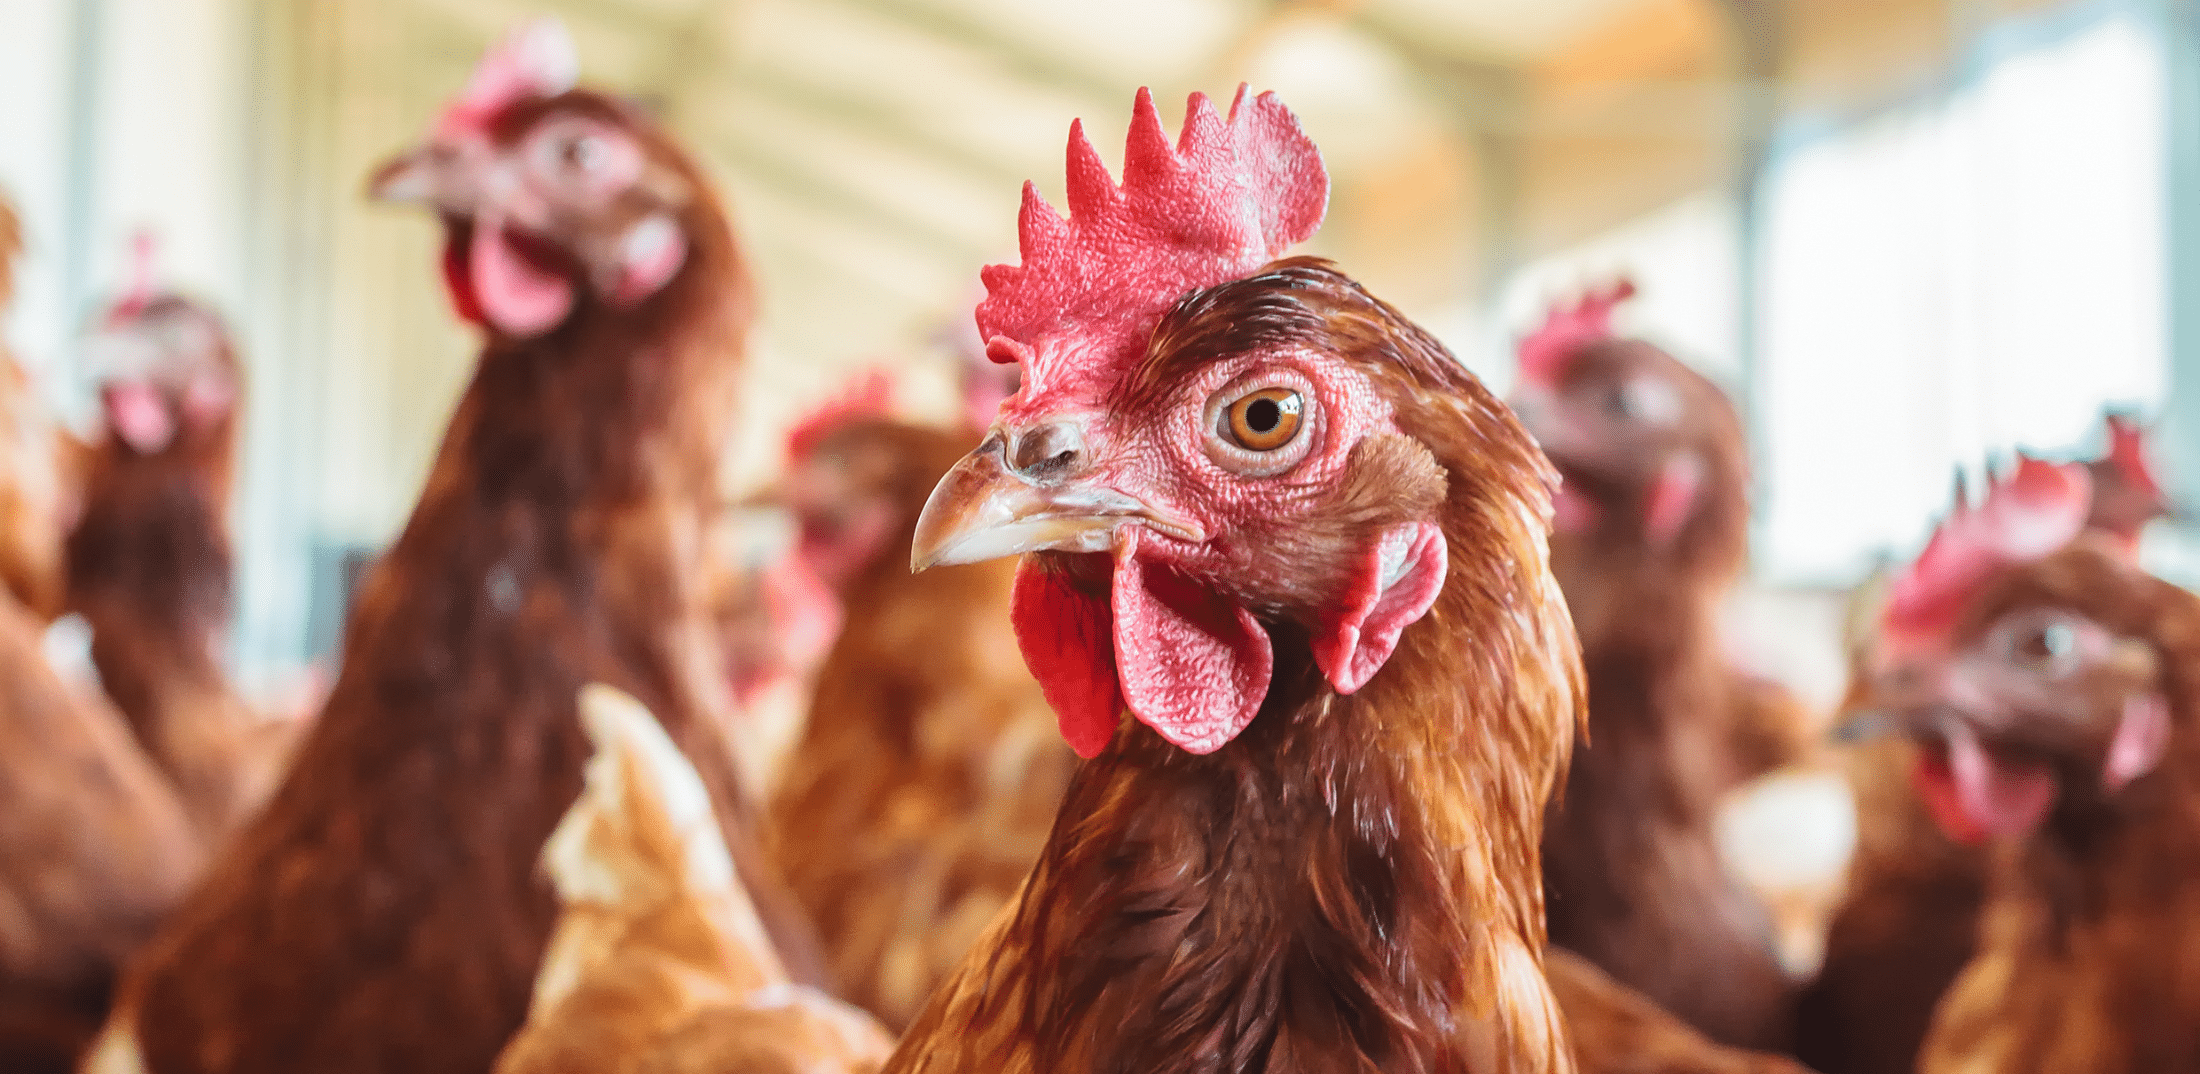 Thousands of Birds Killed, Farmer Livelihoods Jeopardized by Cooks Venture Closure